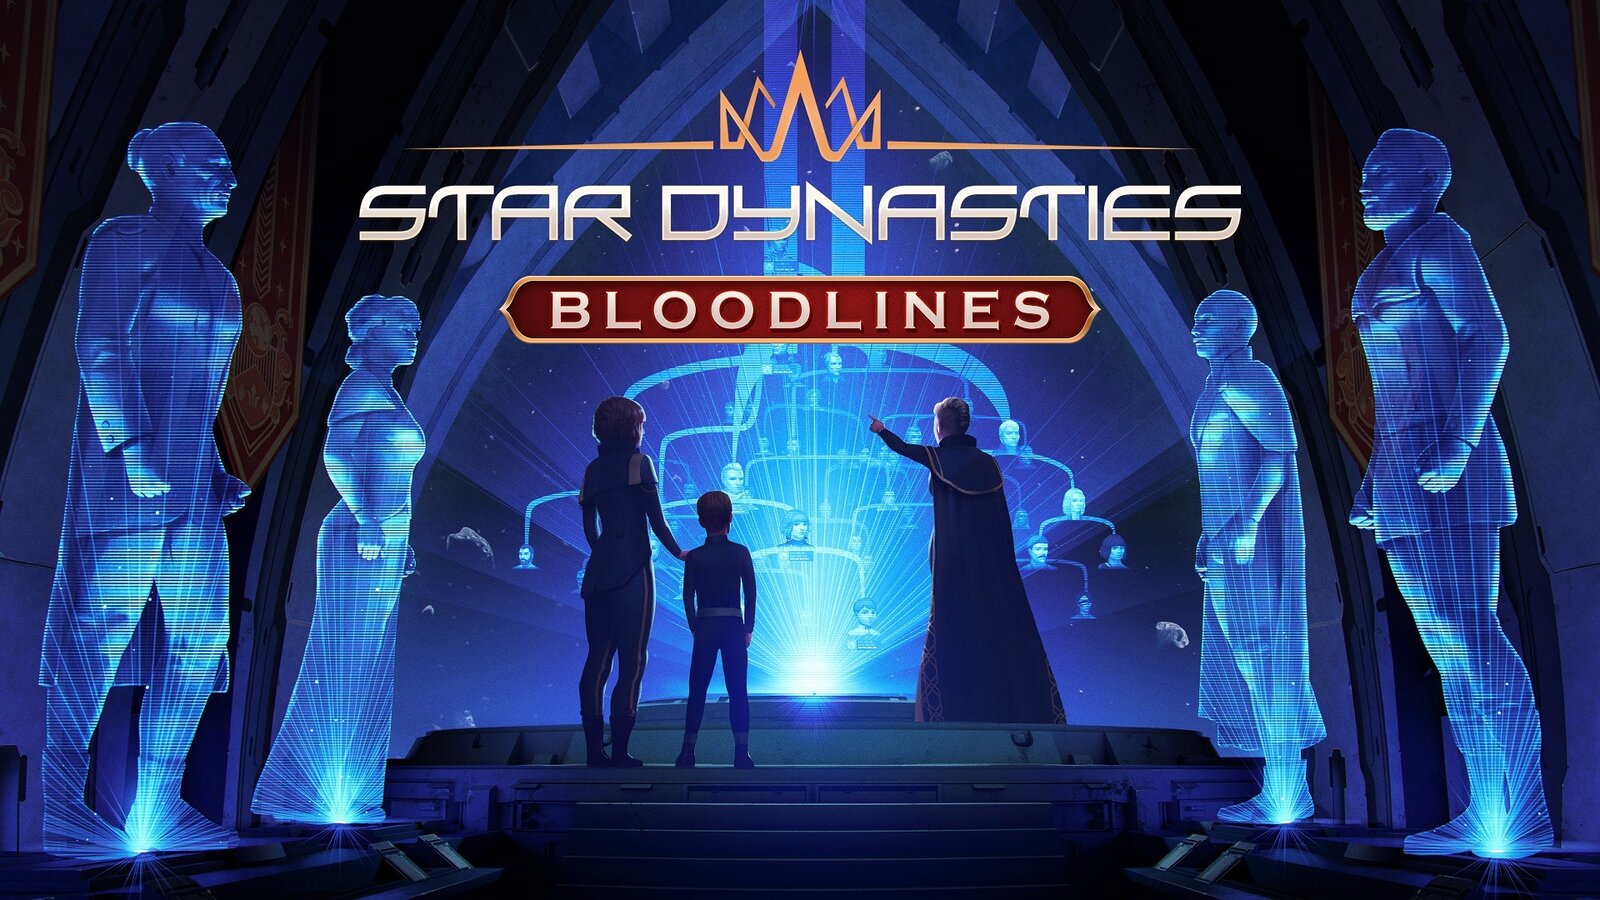 Star Dynasties: Bloodlines